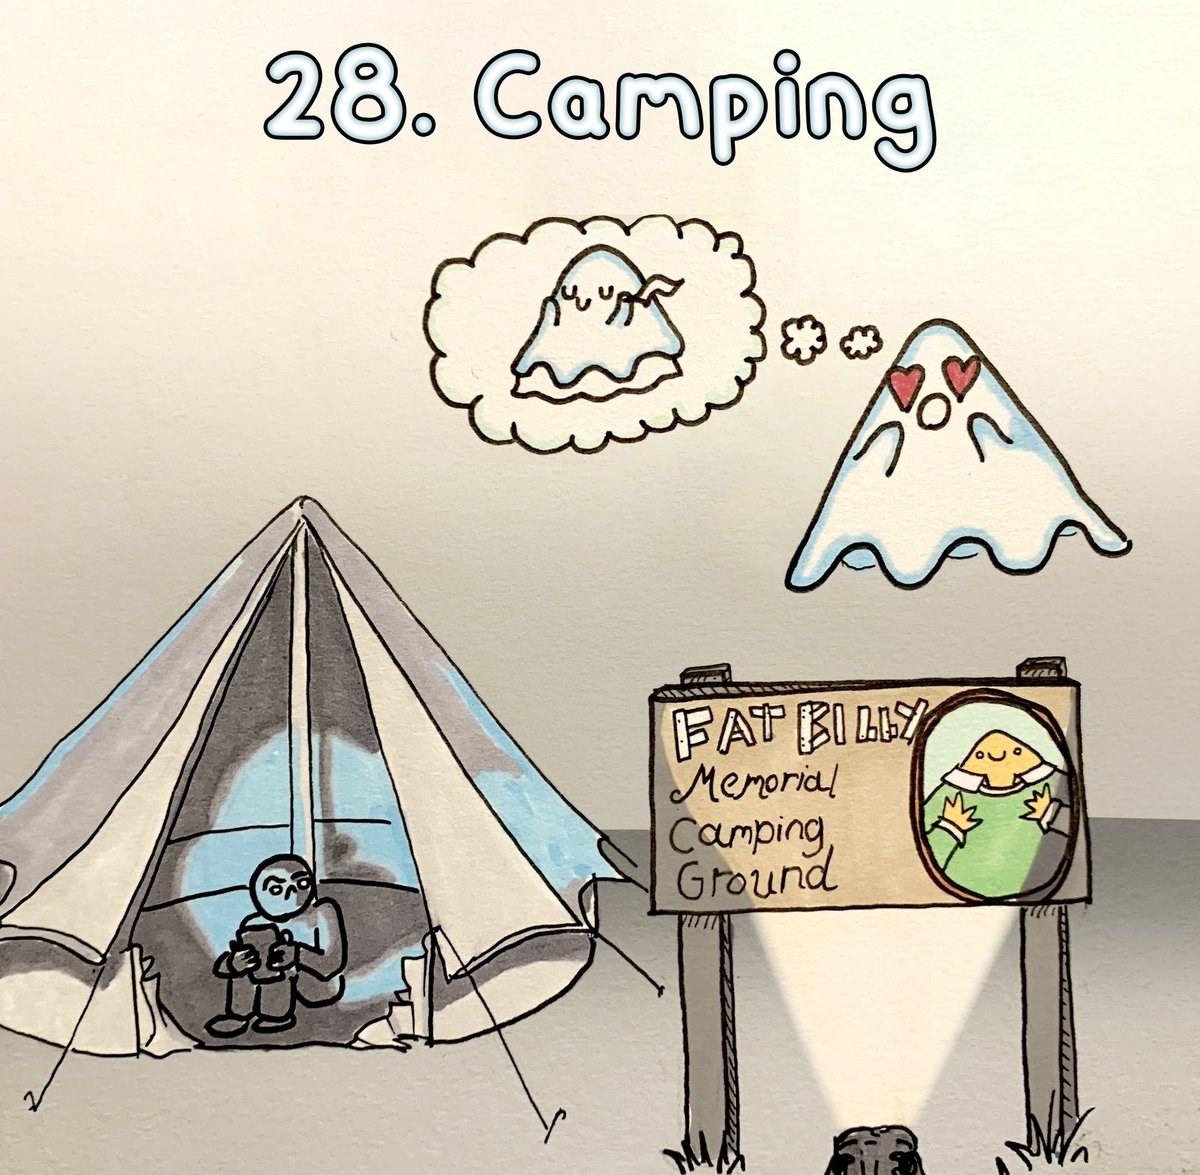 #Inktober Day 28: #Camping 

#inktober2022 #inktoberday28 #inktober2022Camping #ghost #tent #camp #campingground #memorial #doodle #drawing #illustration #illustrator #promarker #winsorandnewton